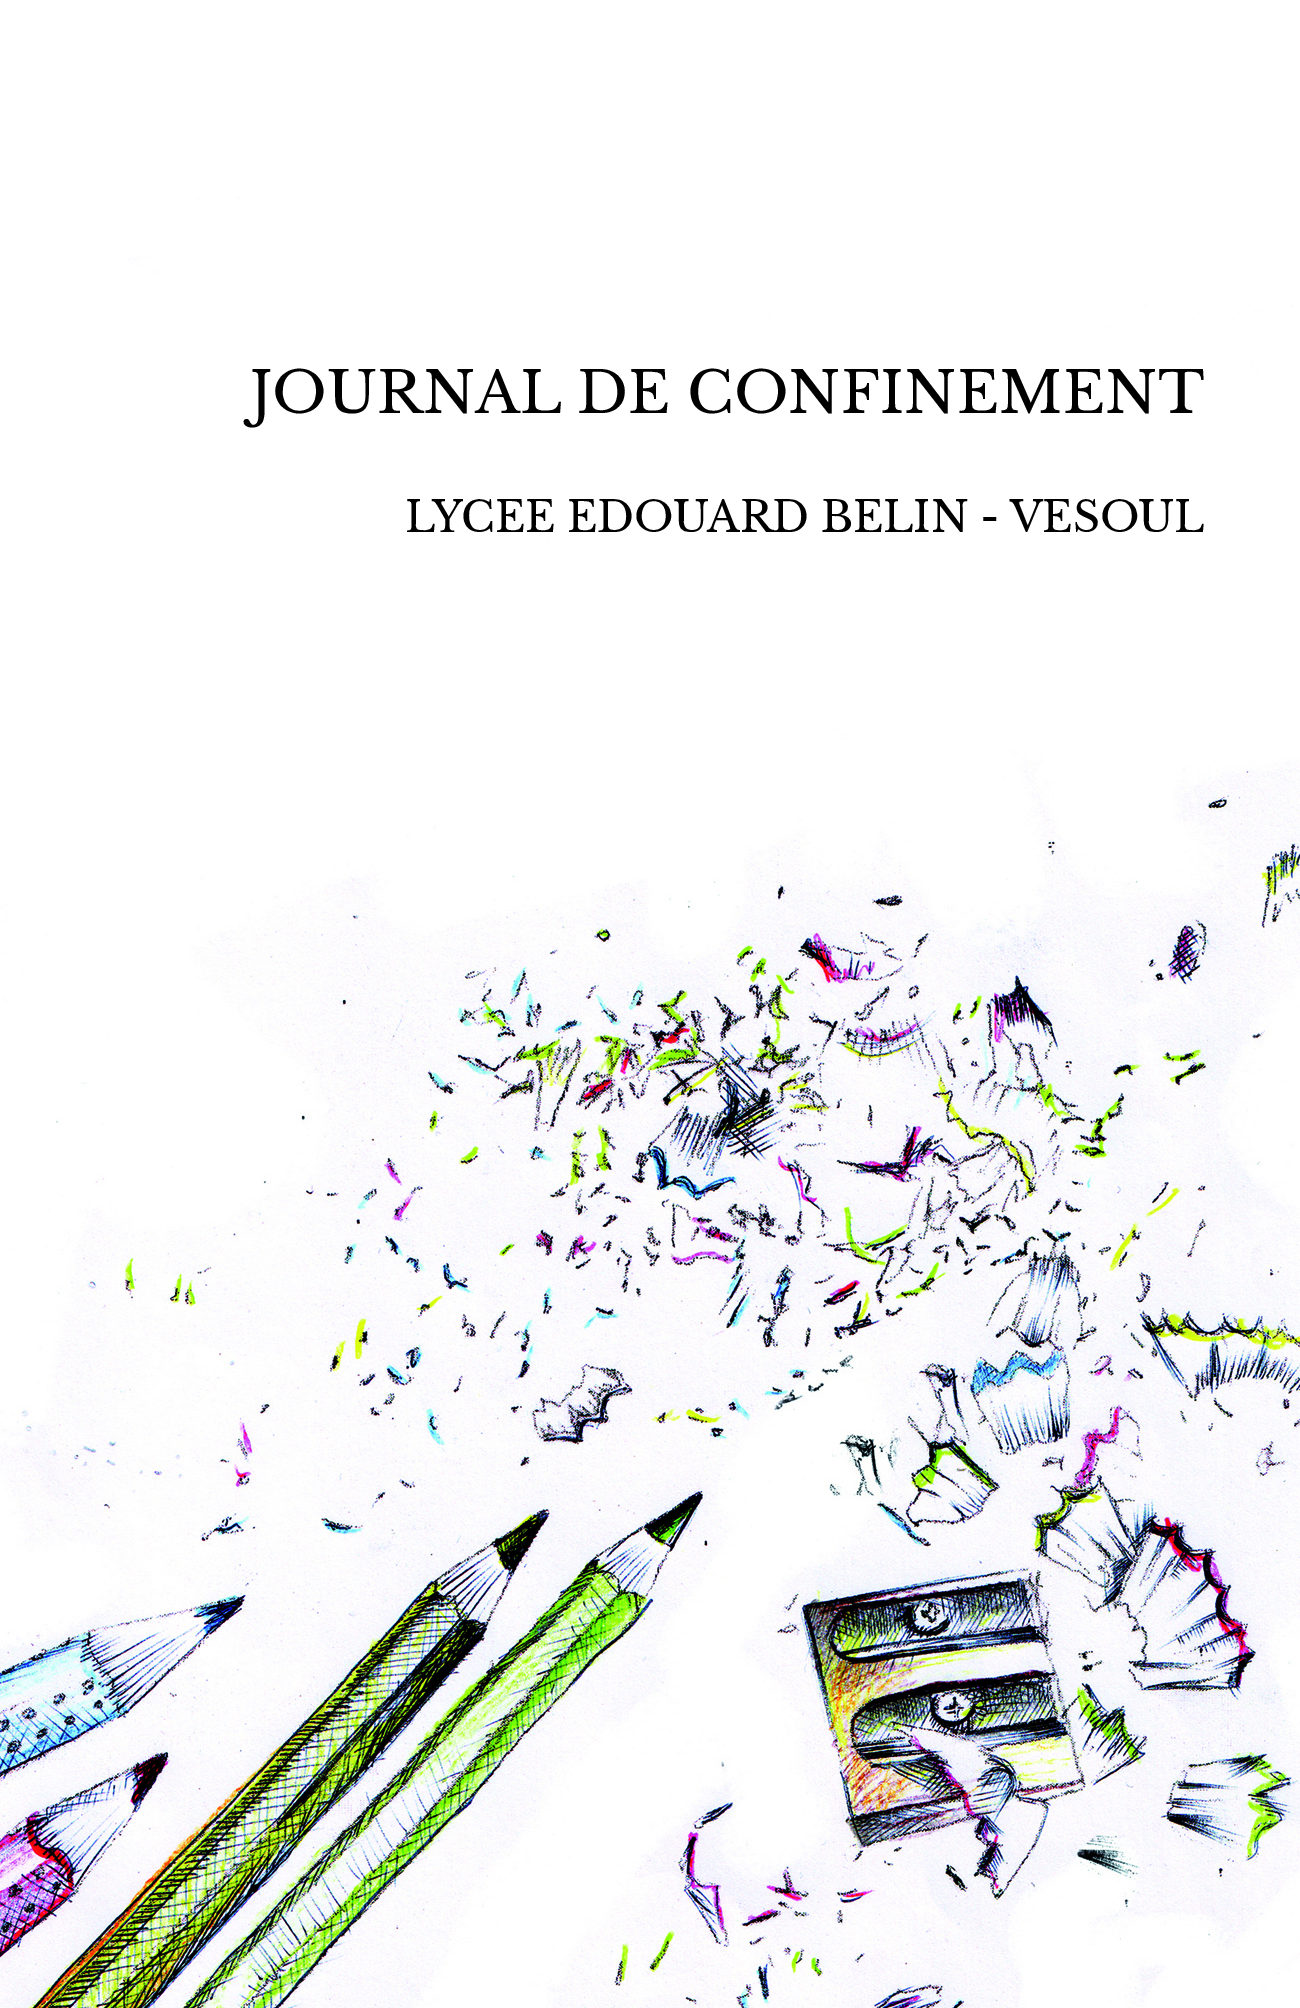 JOURNAL DE CONFINEMENT